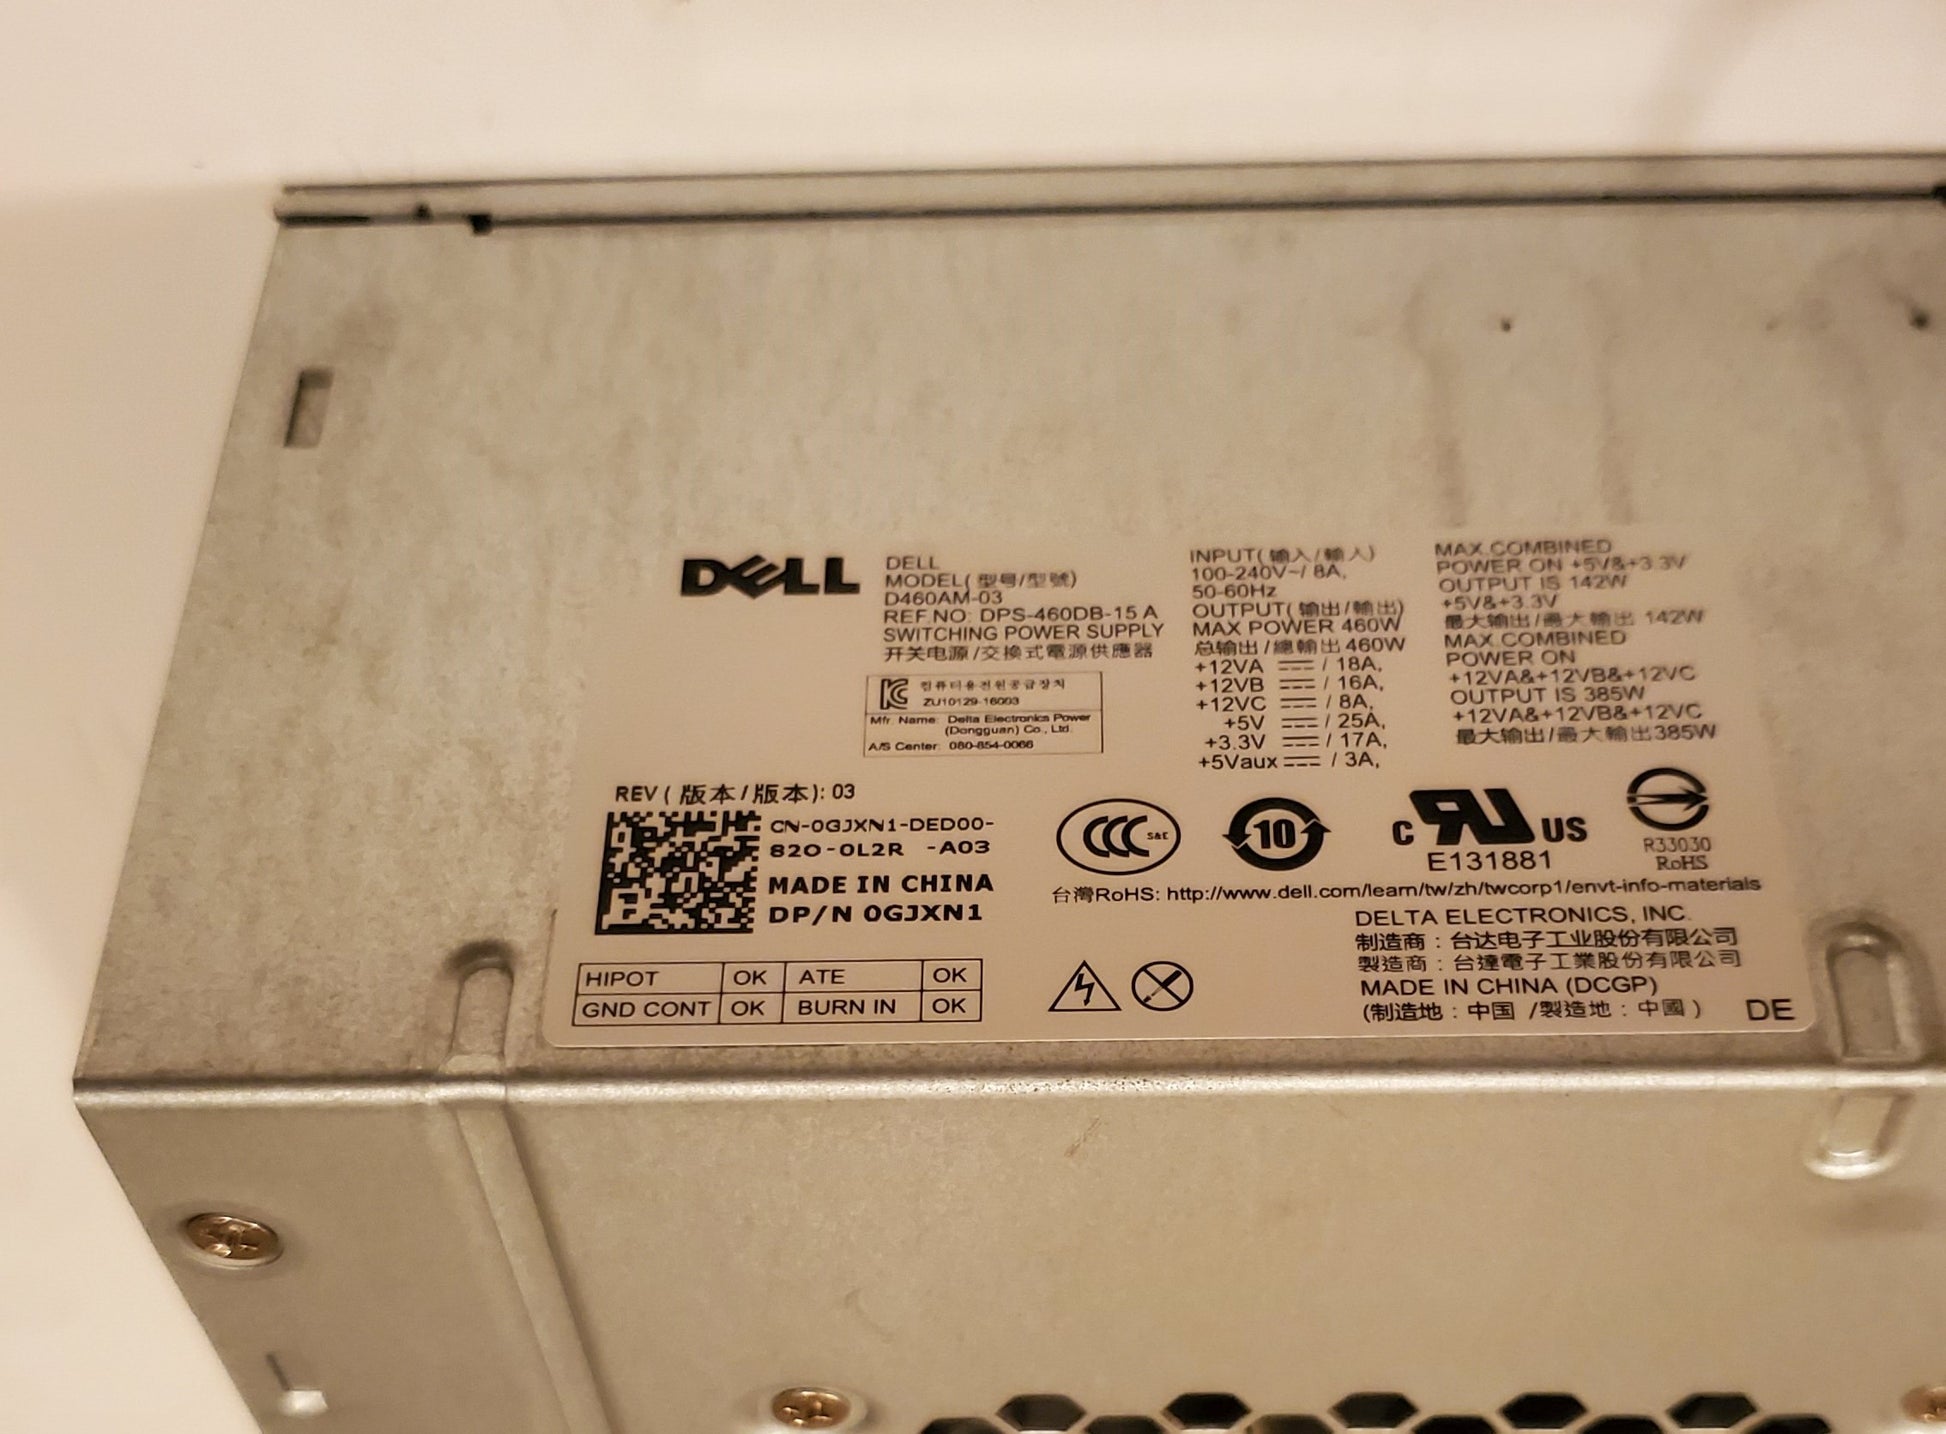 Dell D460AM-03 - 460W Power Supply - Rekes Sales